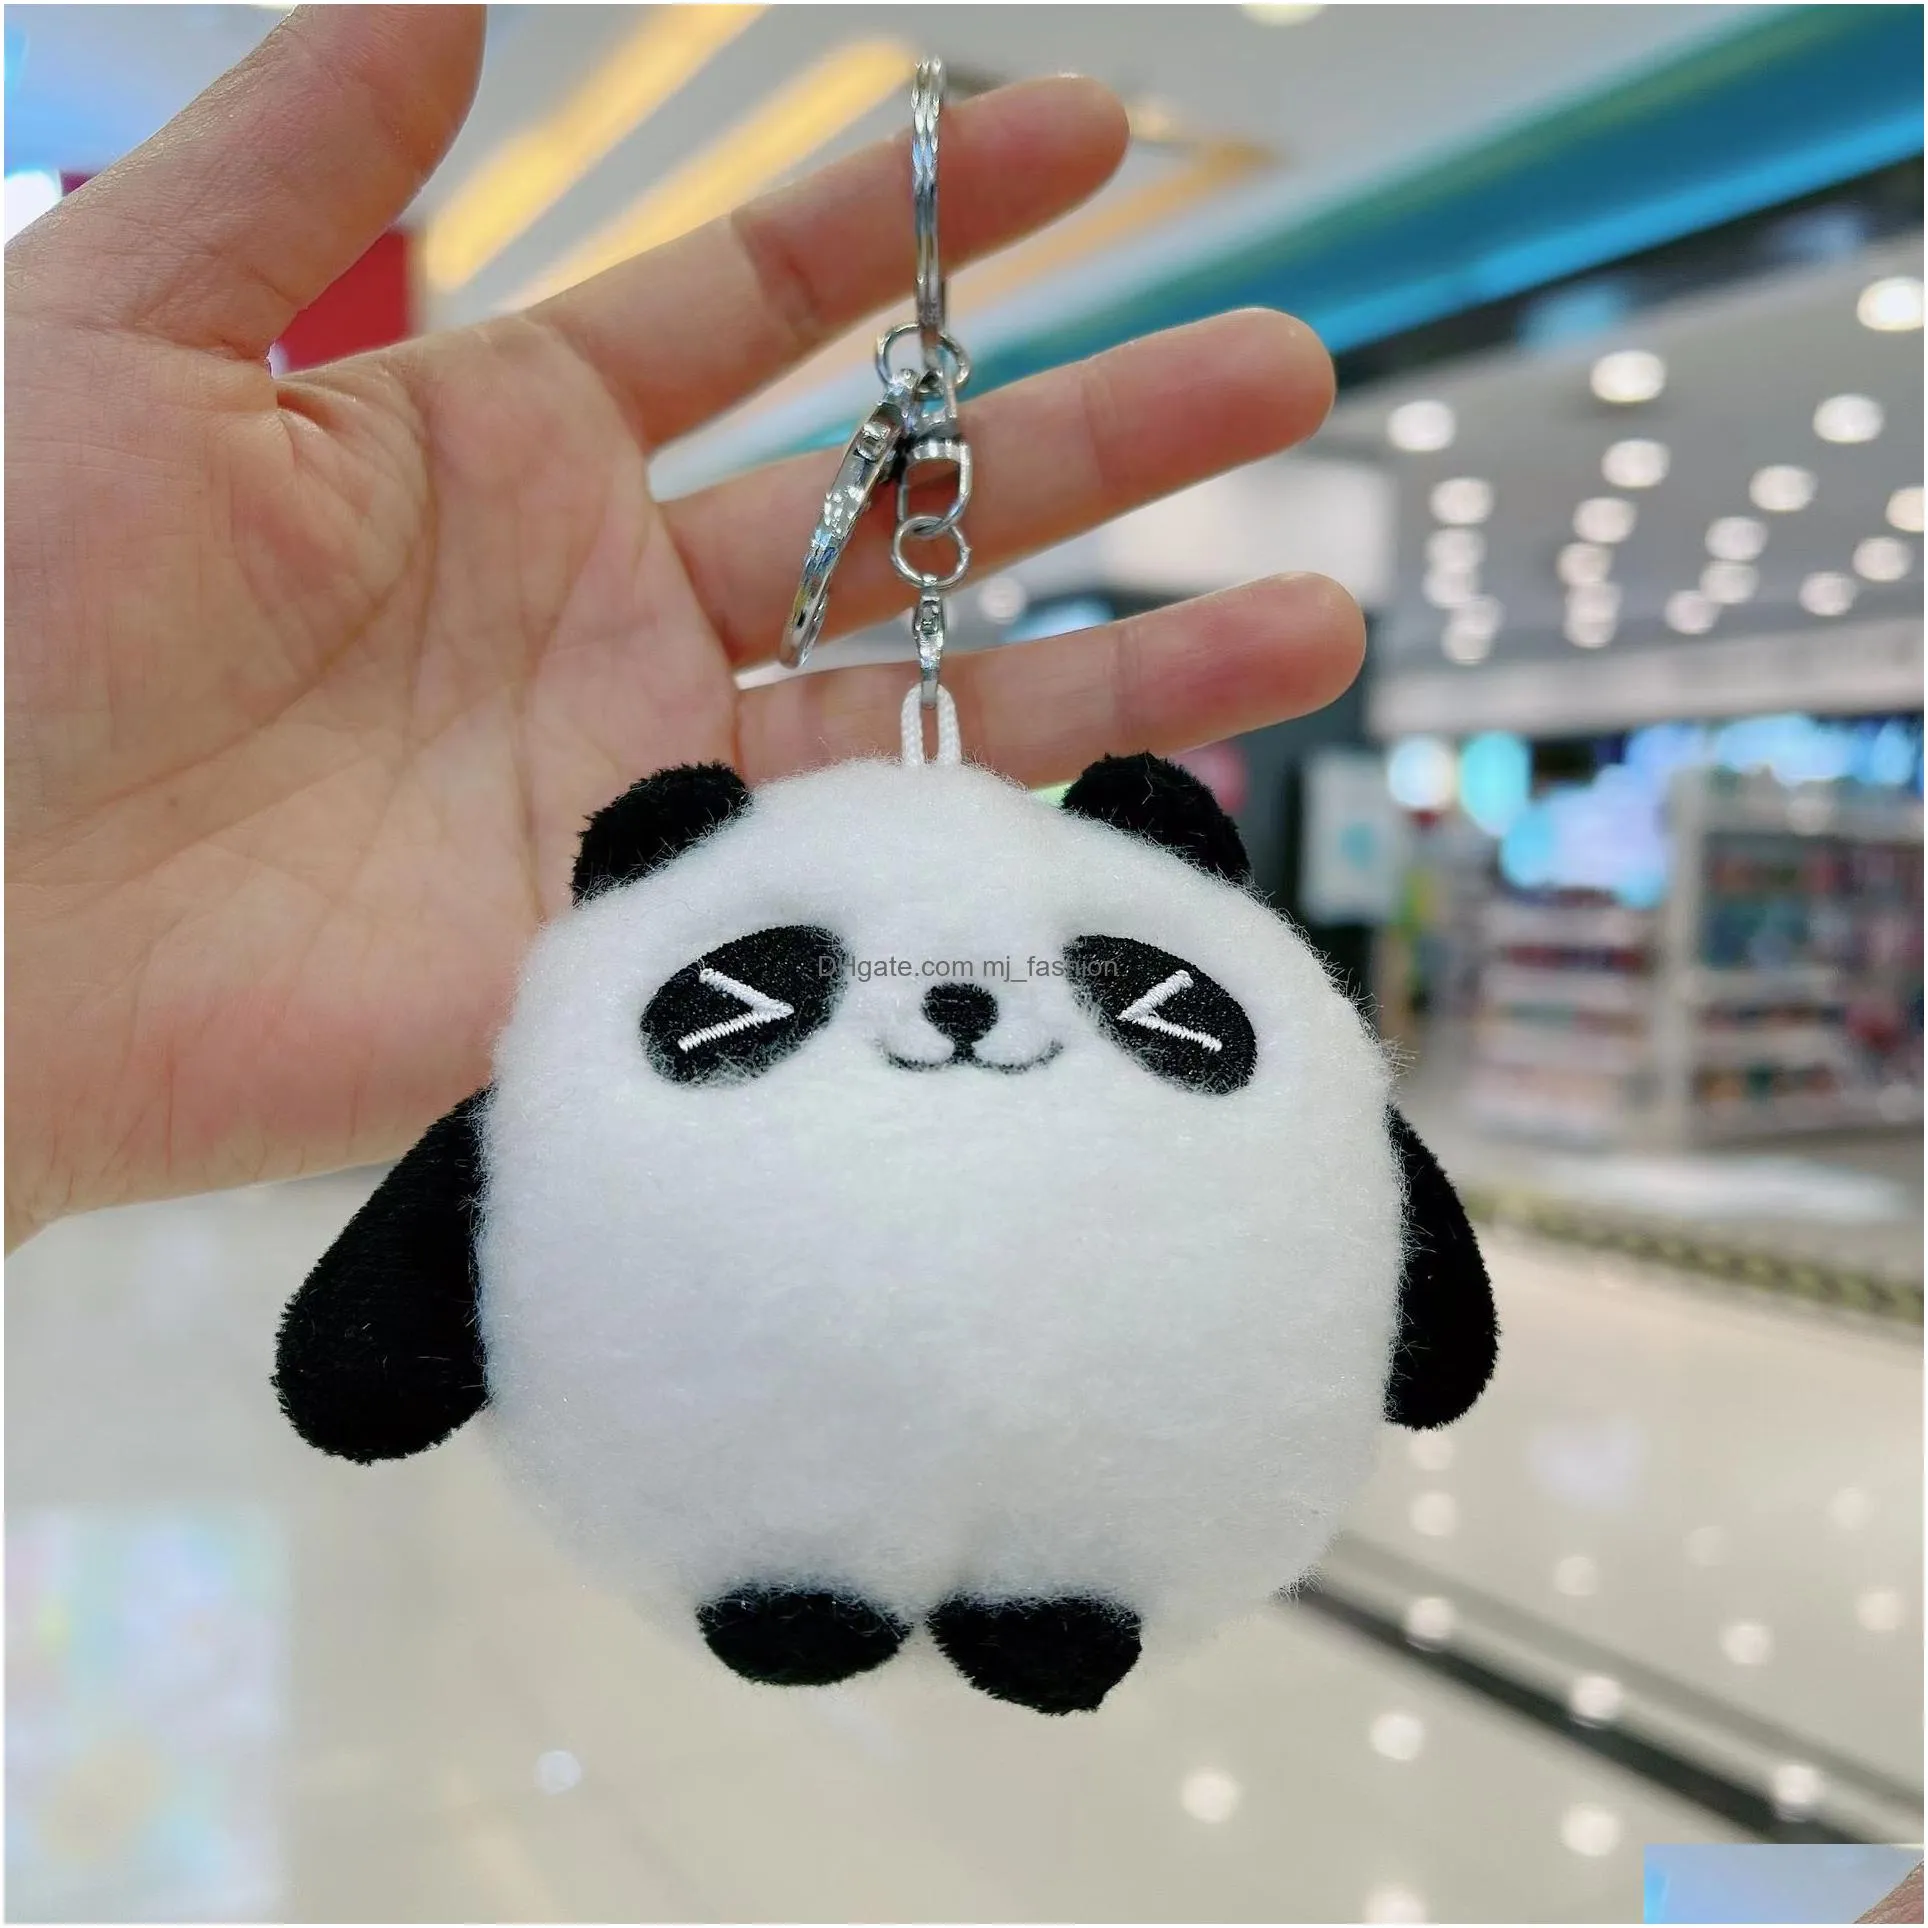 fashion design cartoon panda plush toy keychains small mini doll pendant doll key chain bag ornament